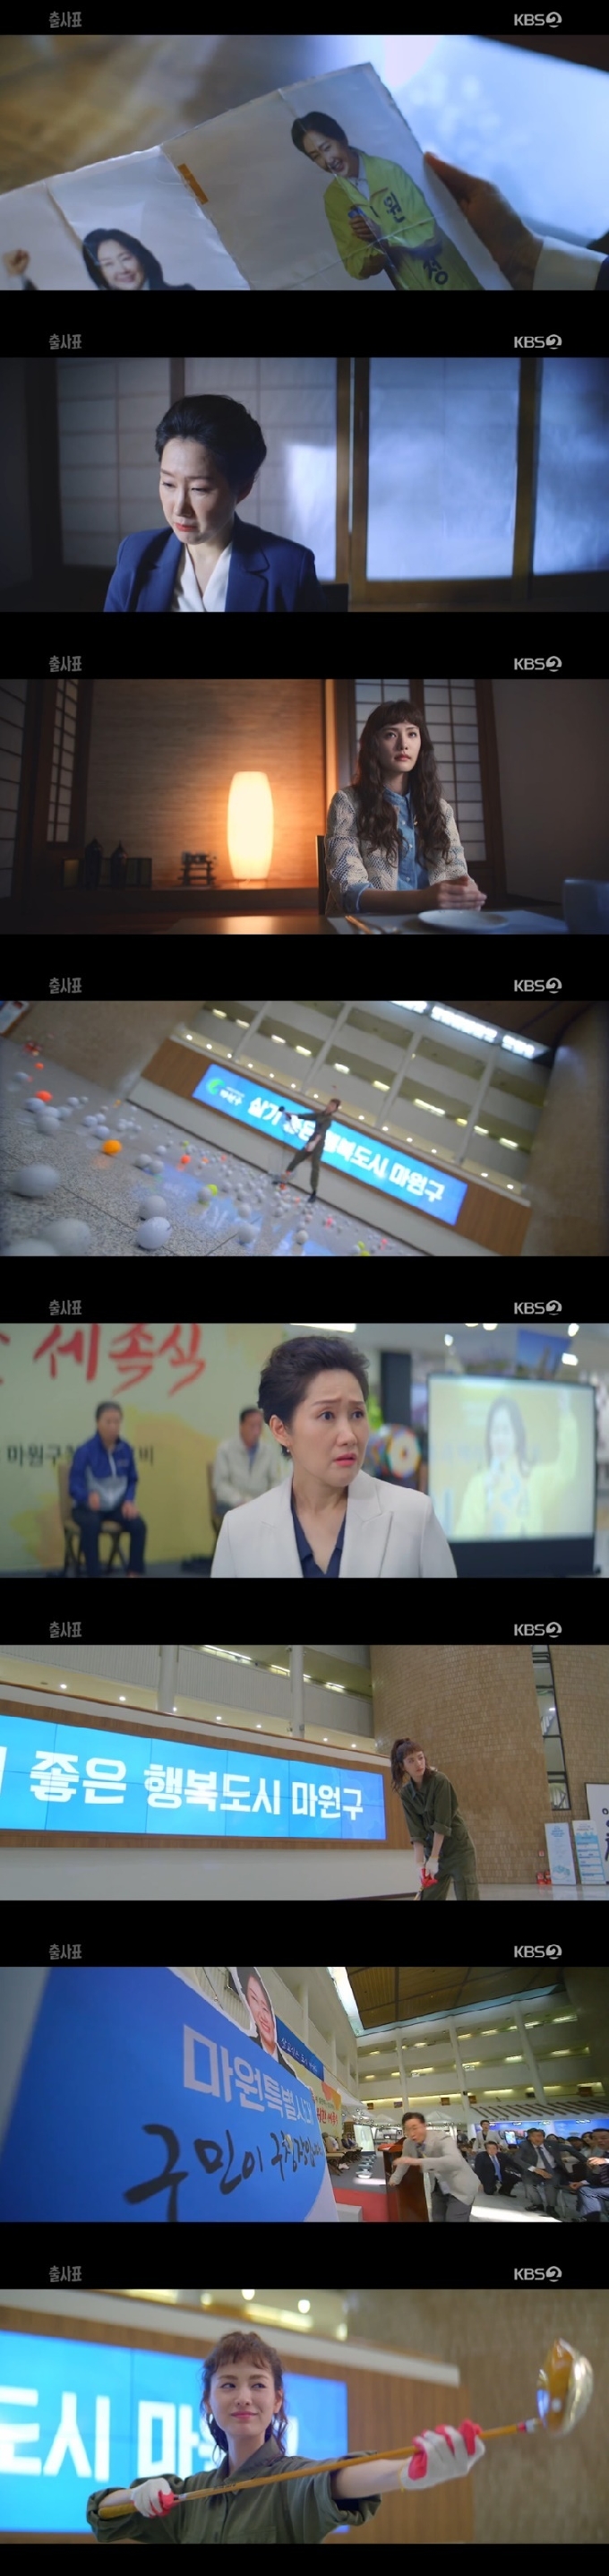 KBS 2TV '출사표' 캡처 © 뉴스1